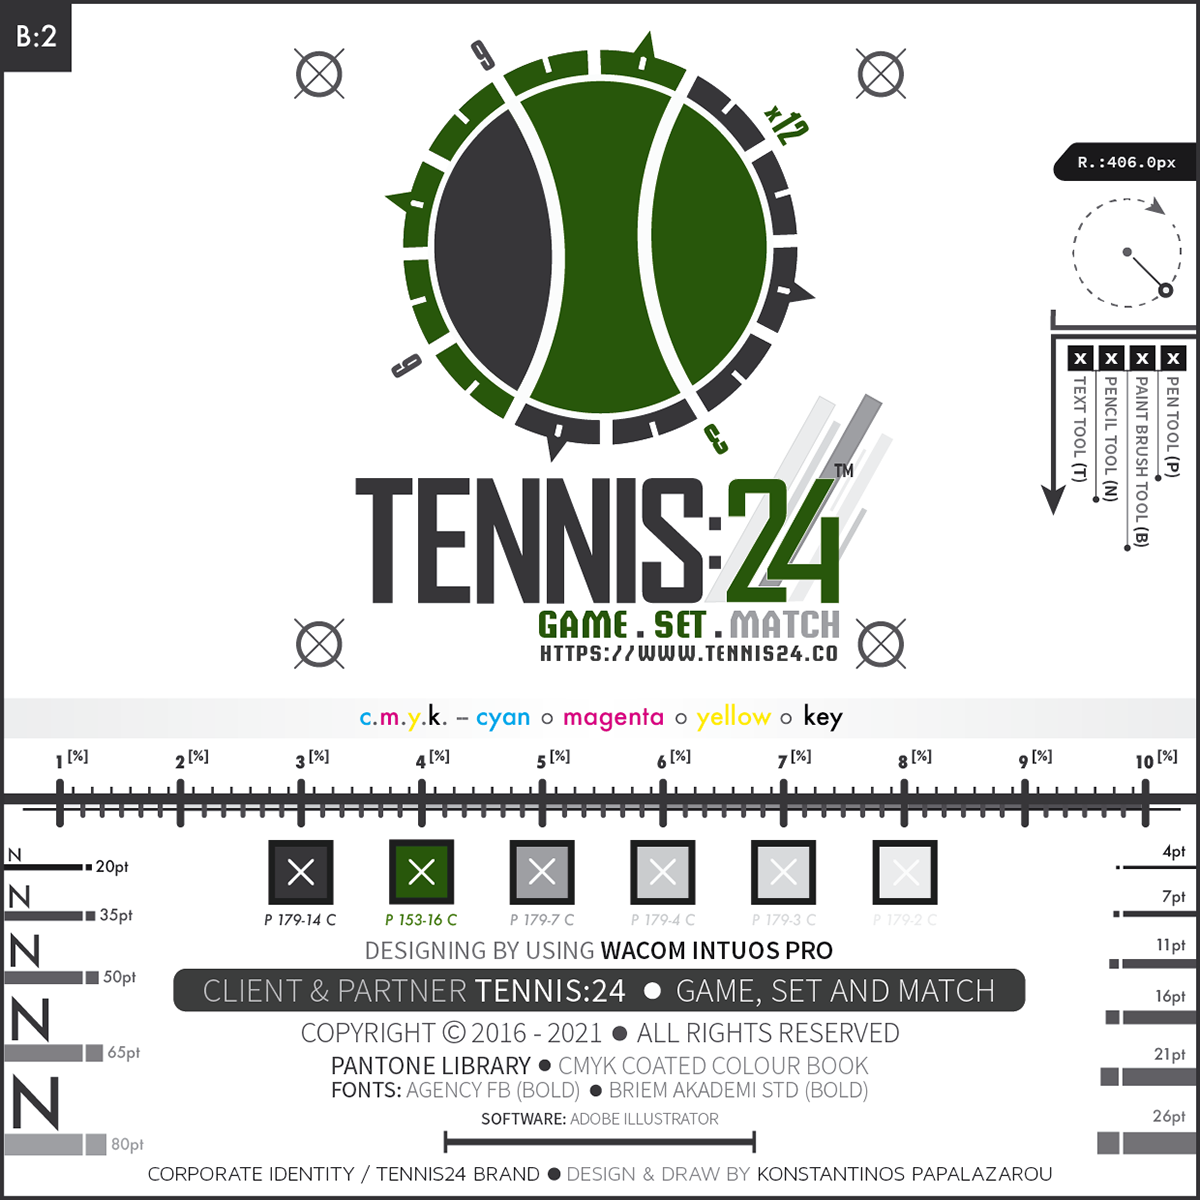 THE TENNIS:24 - GAME, SET & MATCH # Corporate Identity - Framework B:2